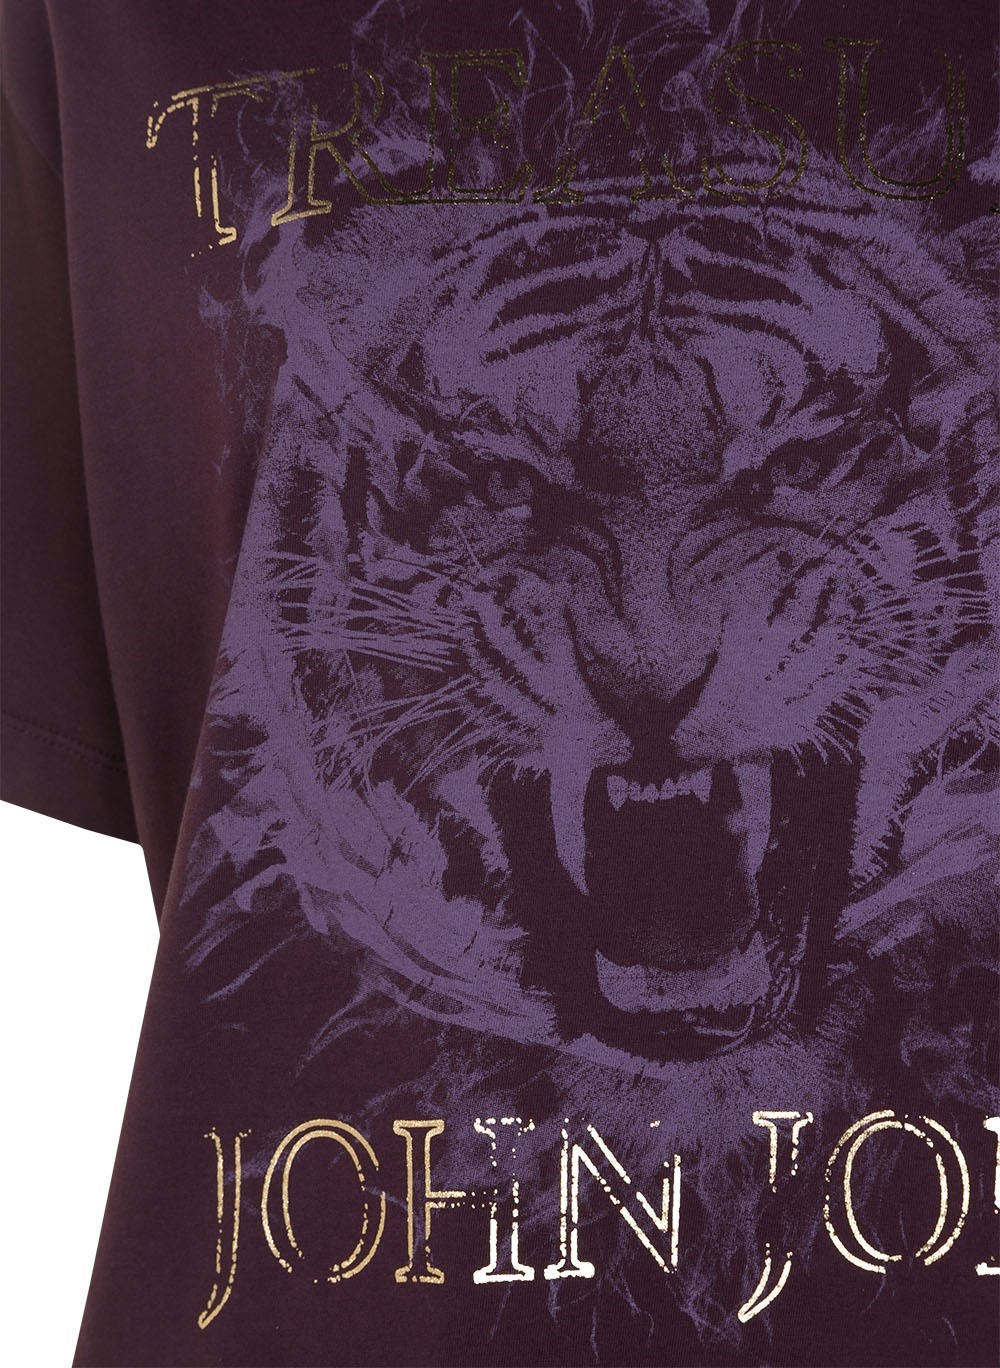 Estaleiro Store - Regata John John The Tiger Feminina